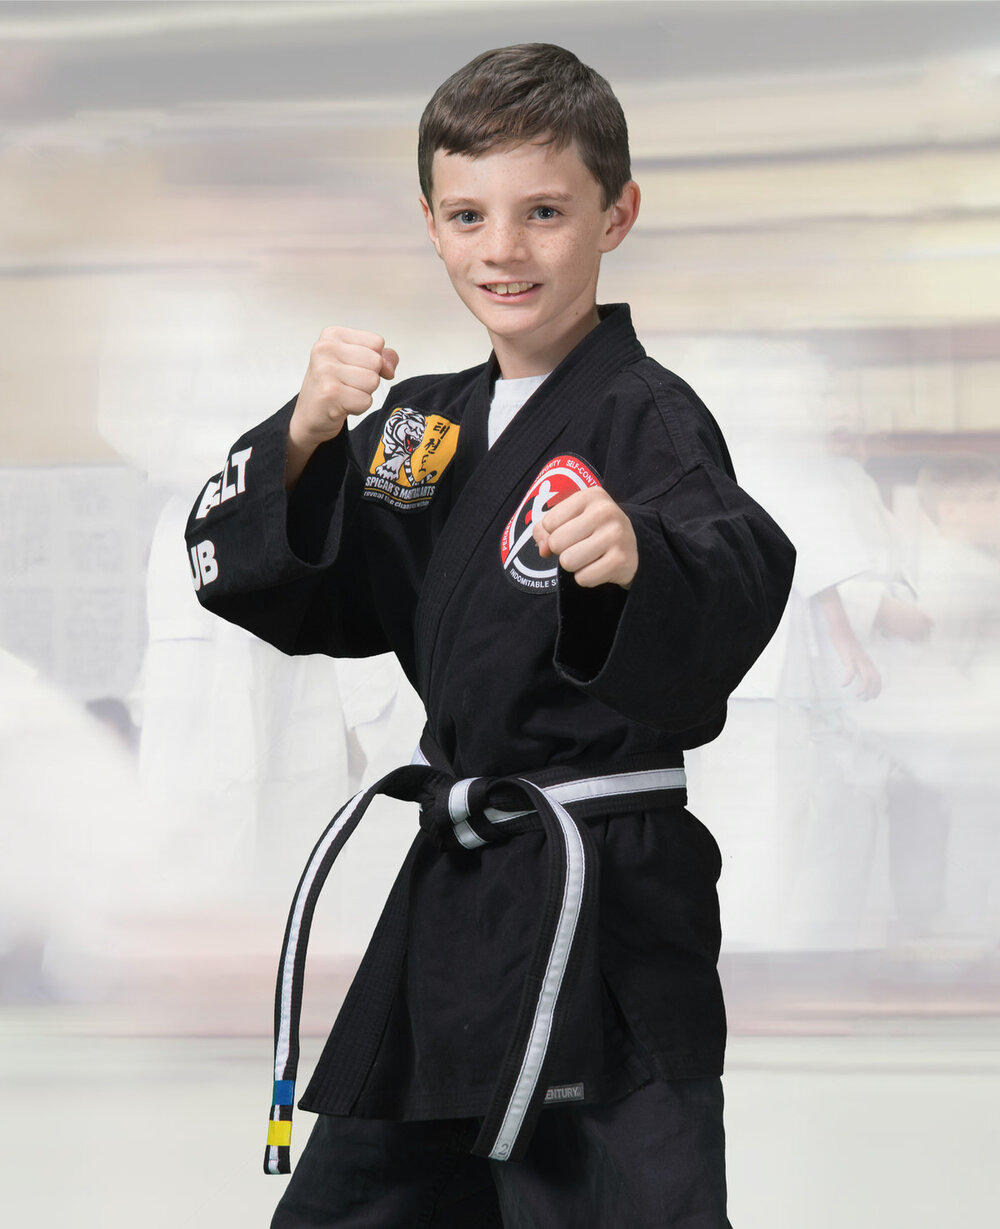 Belts karate vs taekwondo Tae Kwon